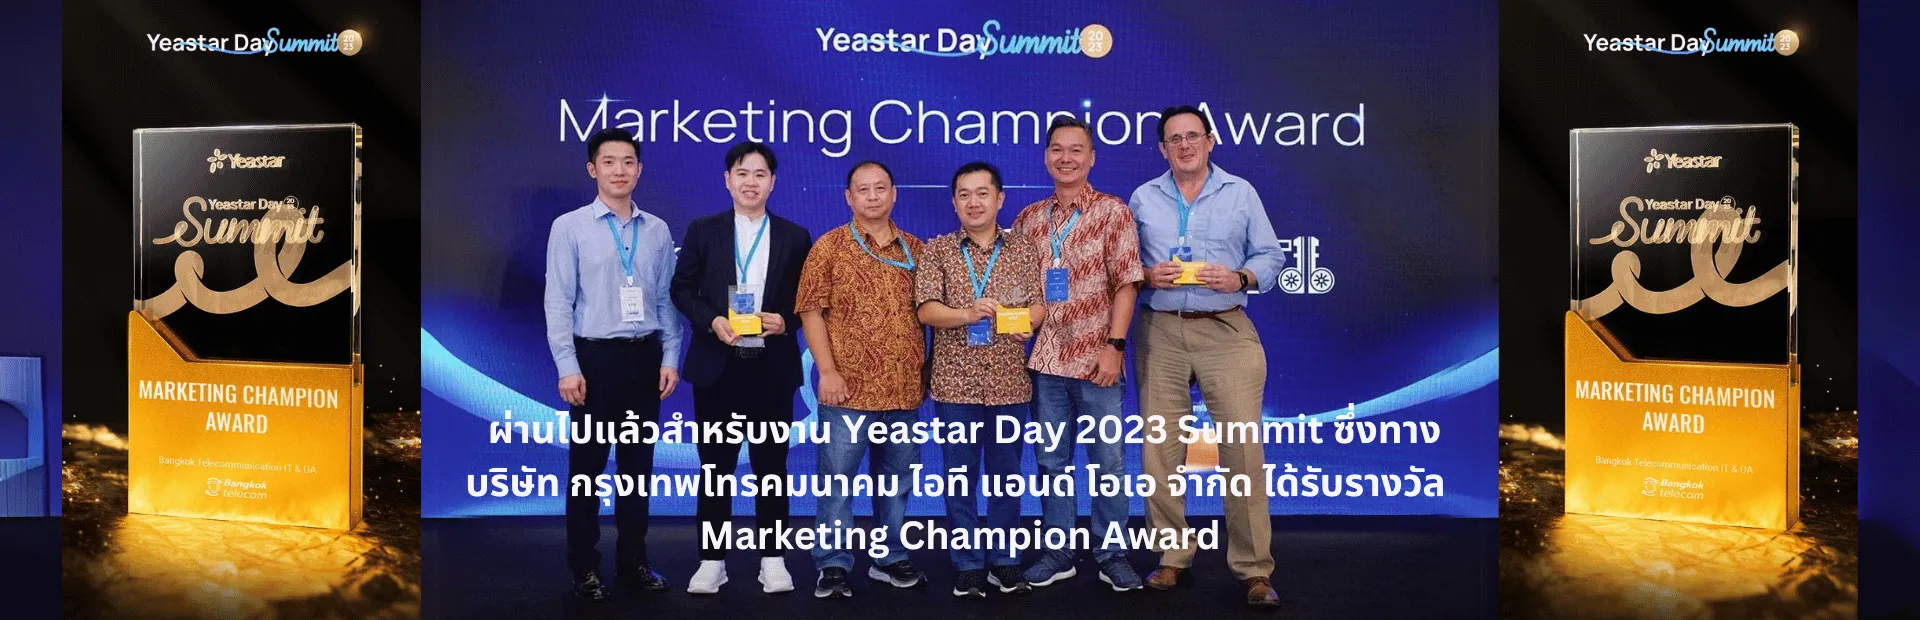 Marketing Champion Award